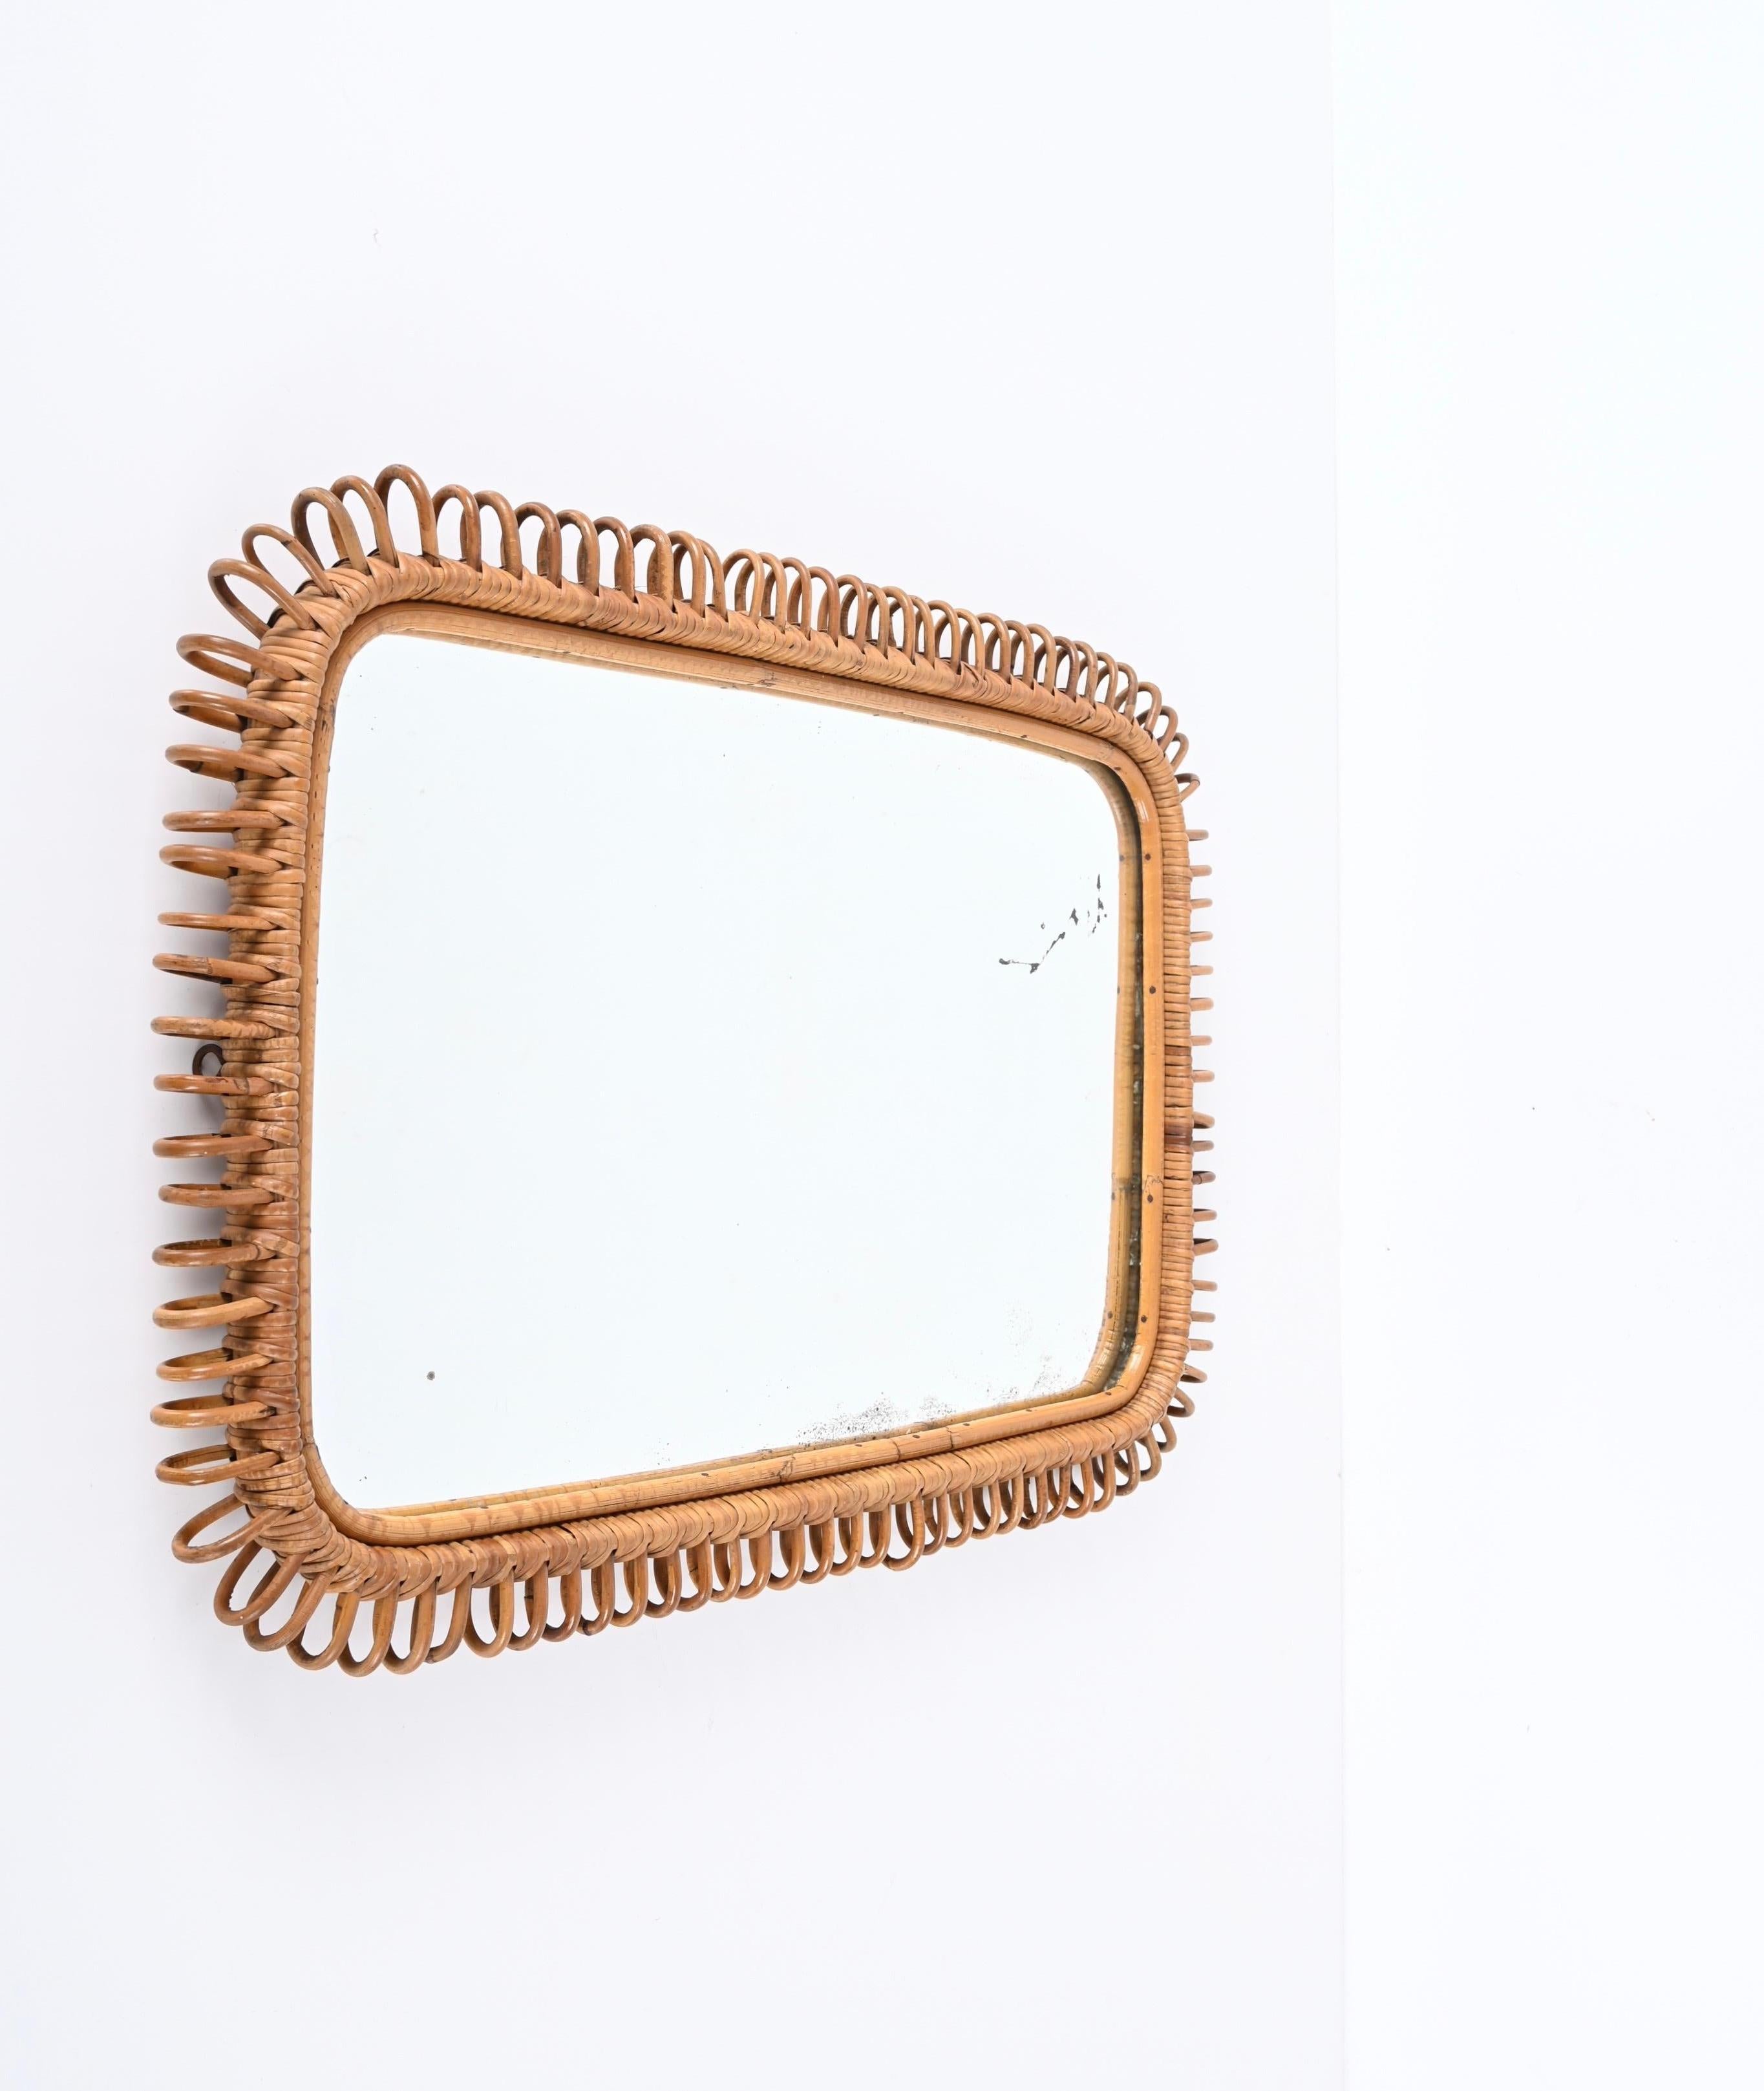 Wicker Midcentury French Riviera Bamboo and Rattan Rectangular Wall Mirror, 1970s